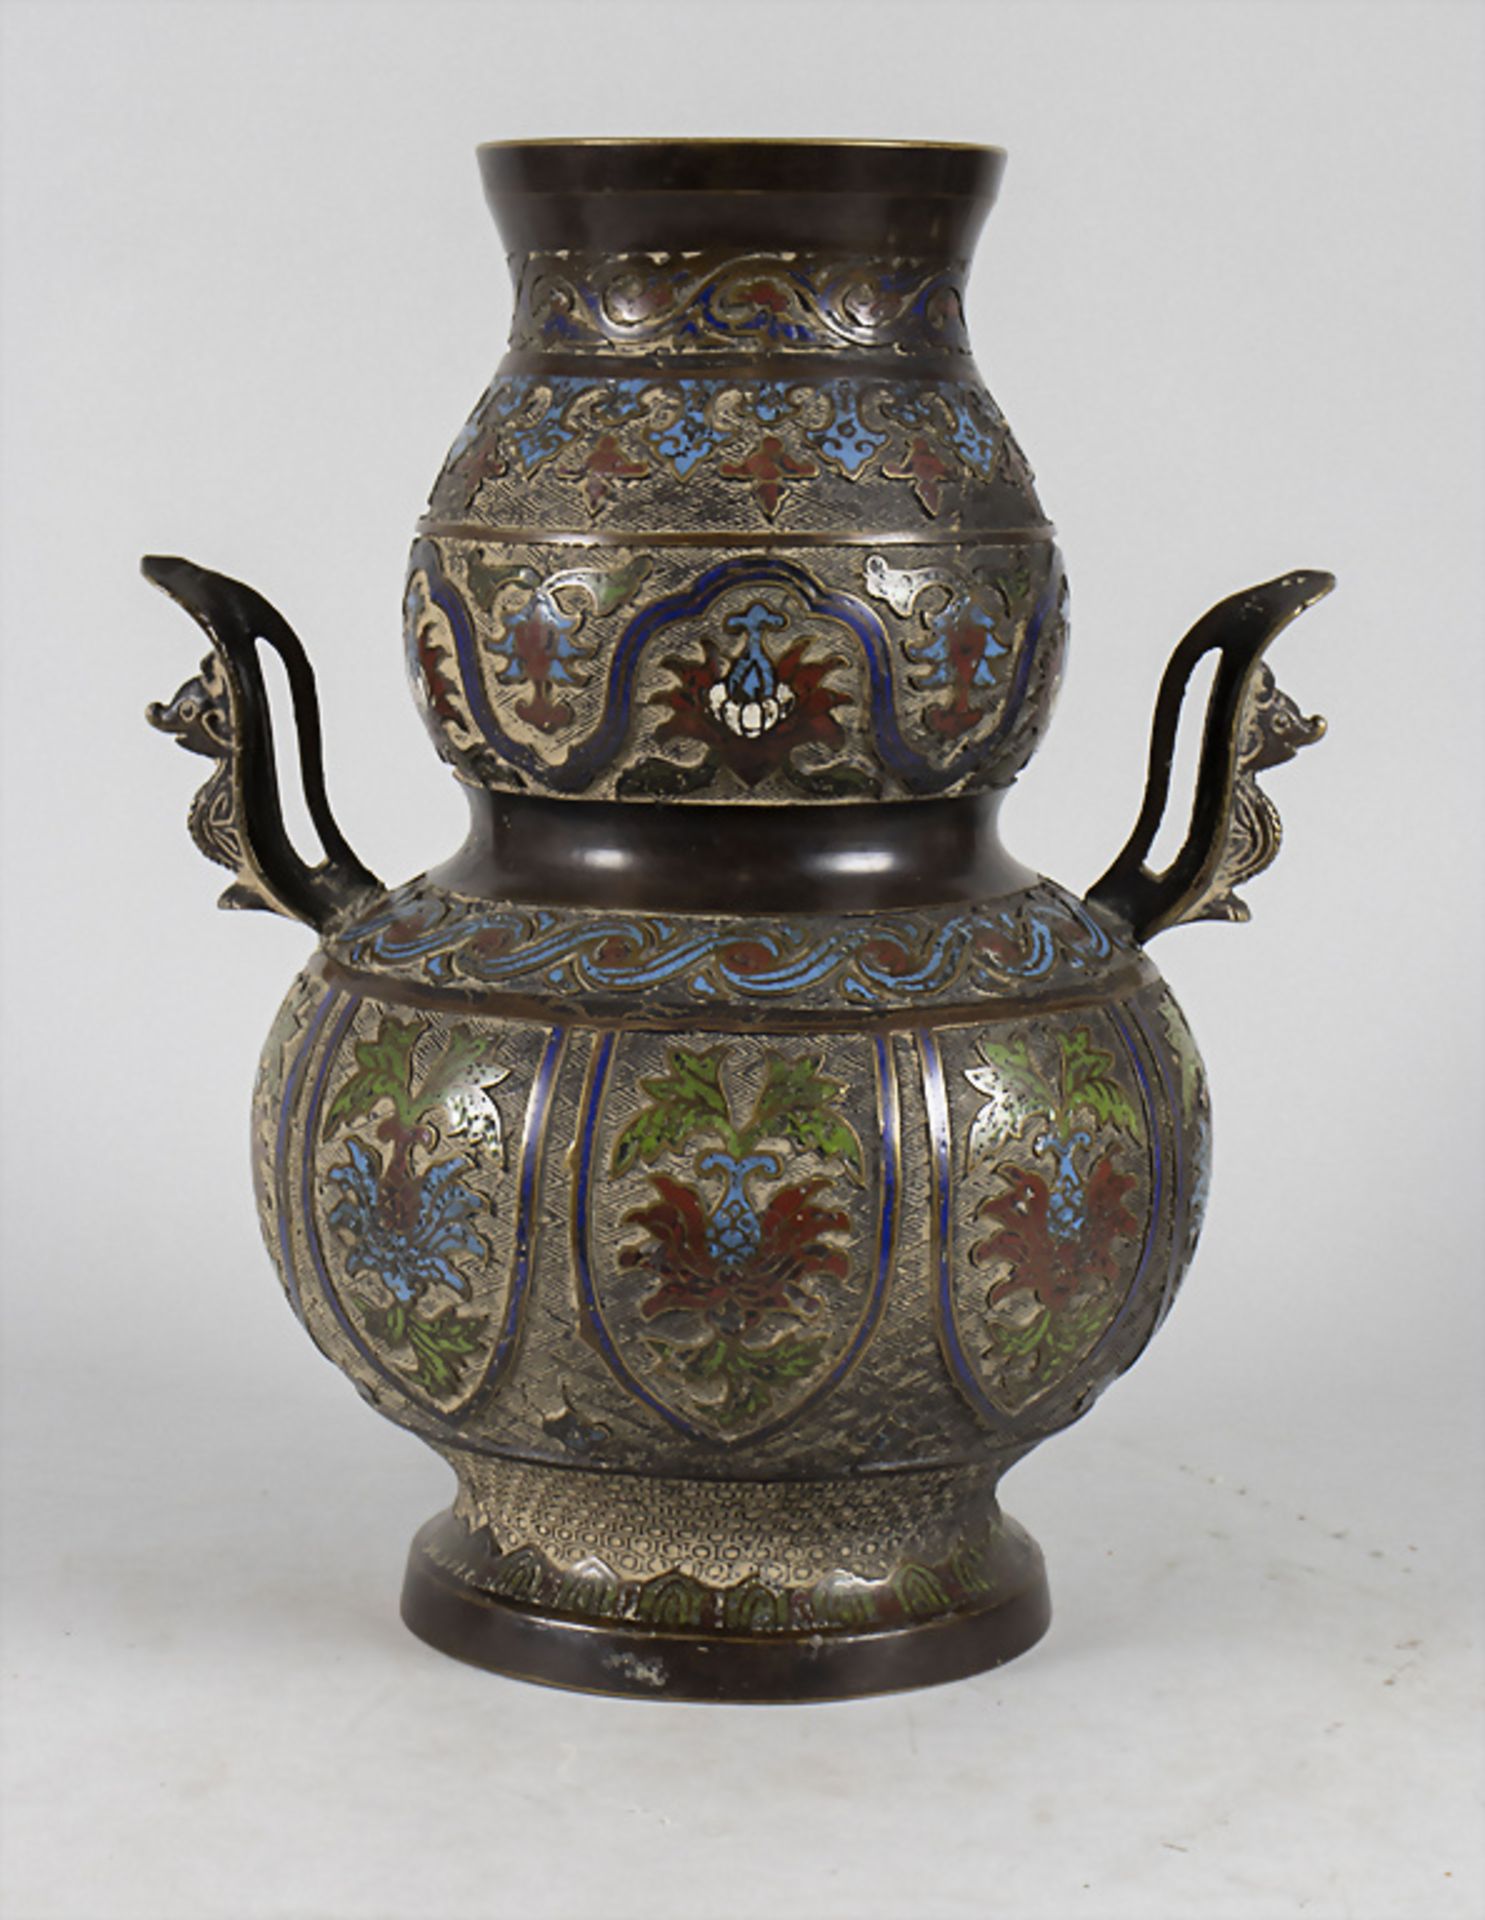 Bronzevase mit Champlevé Emaille / A bronze vase with Champlevé enamel , China, 19. Jh.